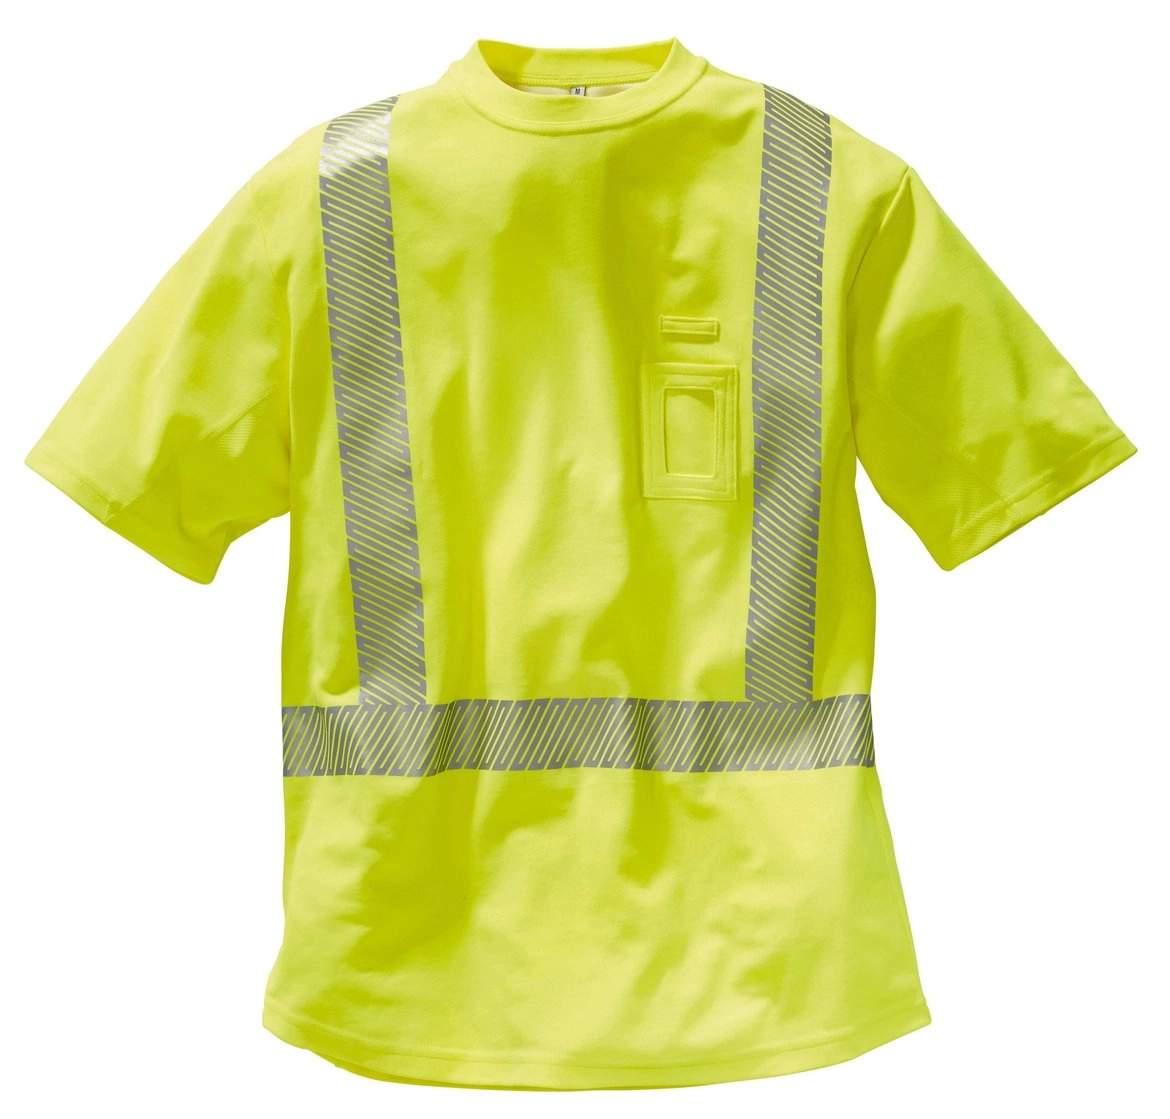 Warnschutz T-Shirt, segmentierte Reflexstreifen, EN20471-2